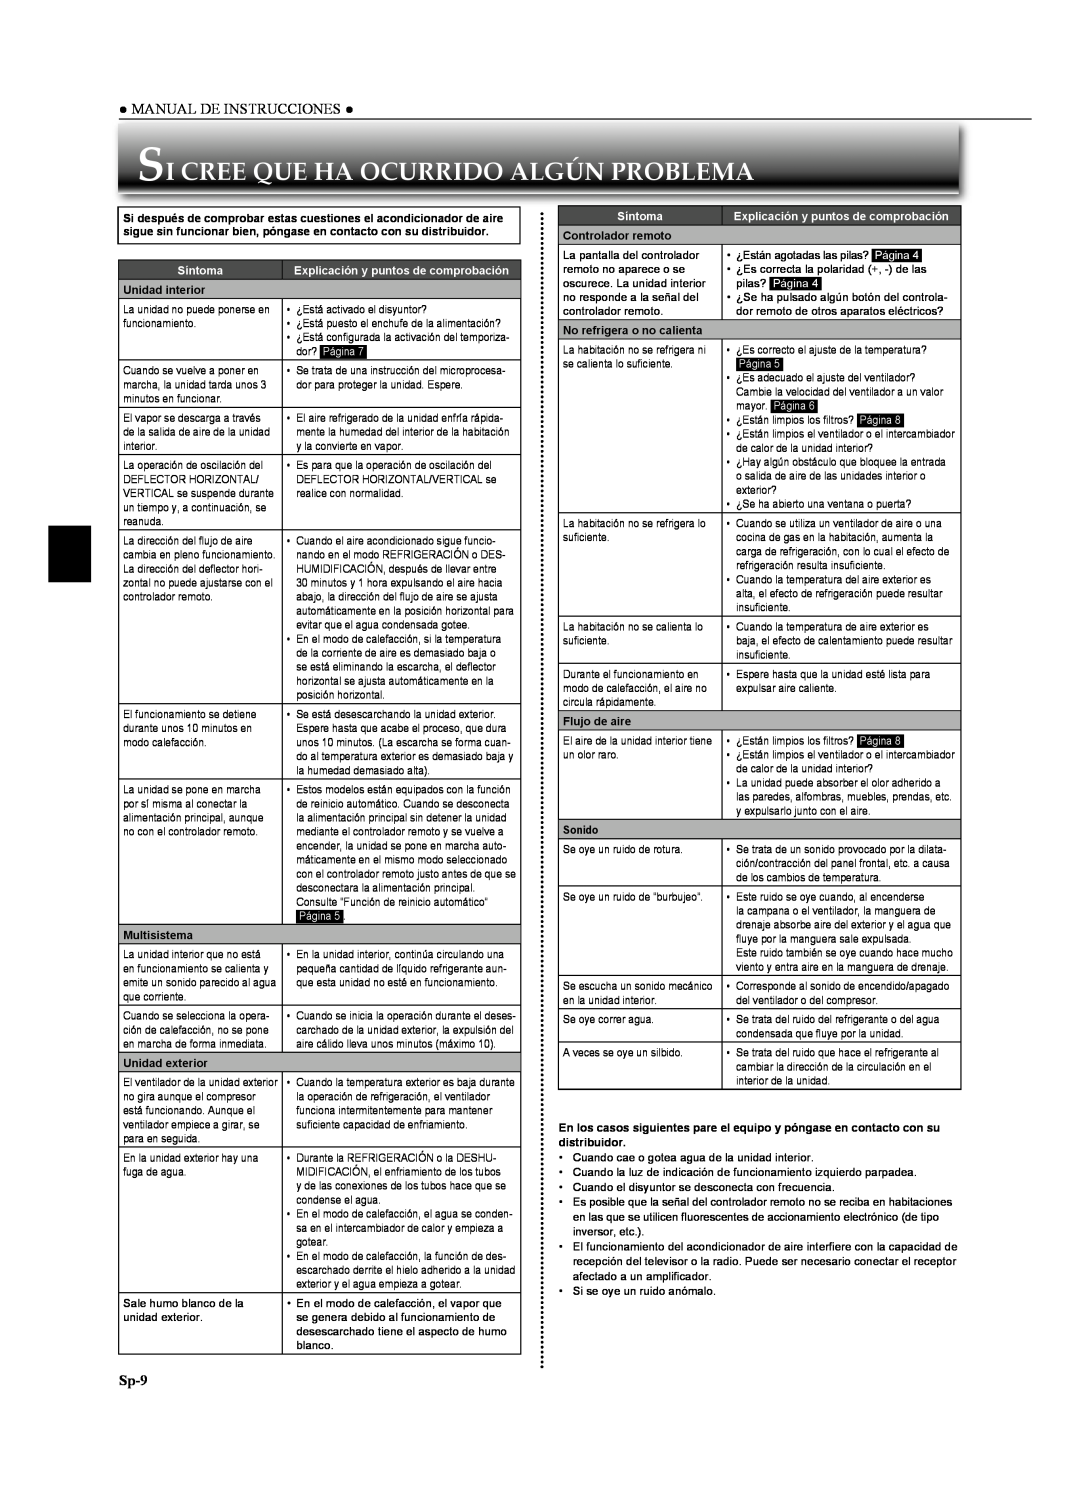 Mitsubishi Electronics MSZ-GA24NA Si Cree Que Ha Ocurrido Algún Problema, Sp-9, Manual De Instrucciones, Síntoma, Página 